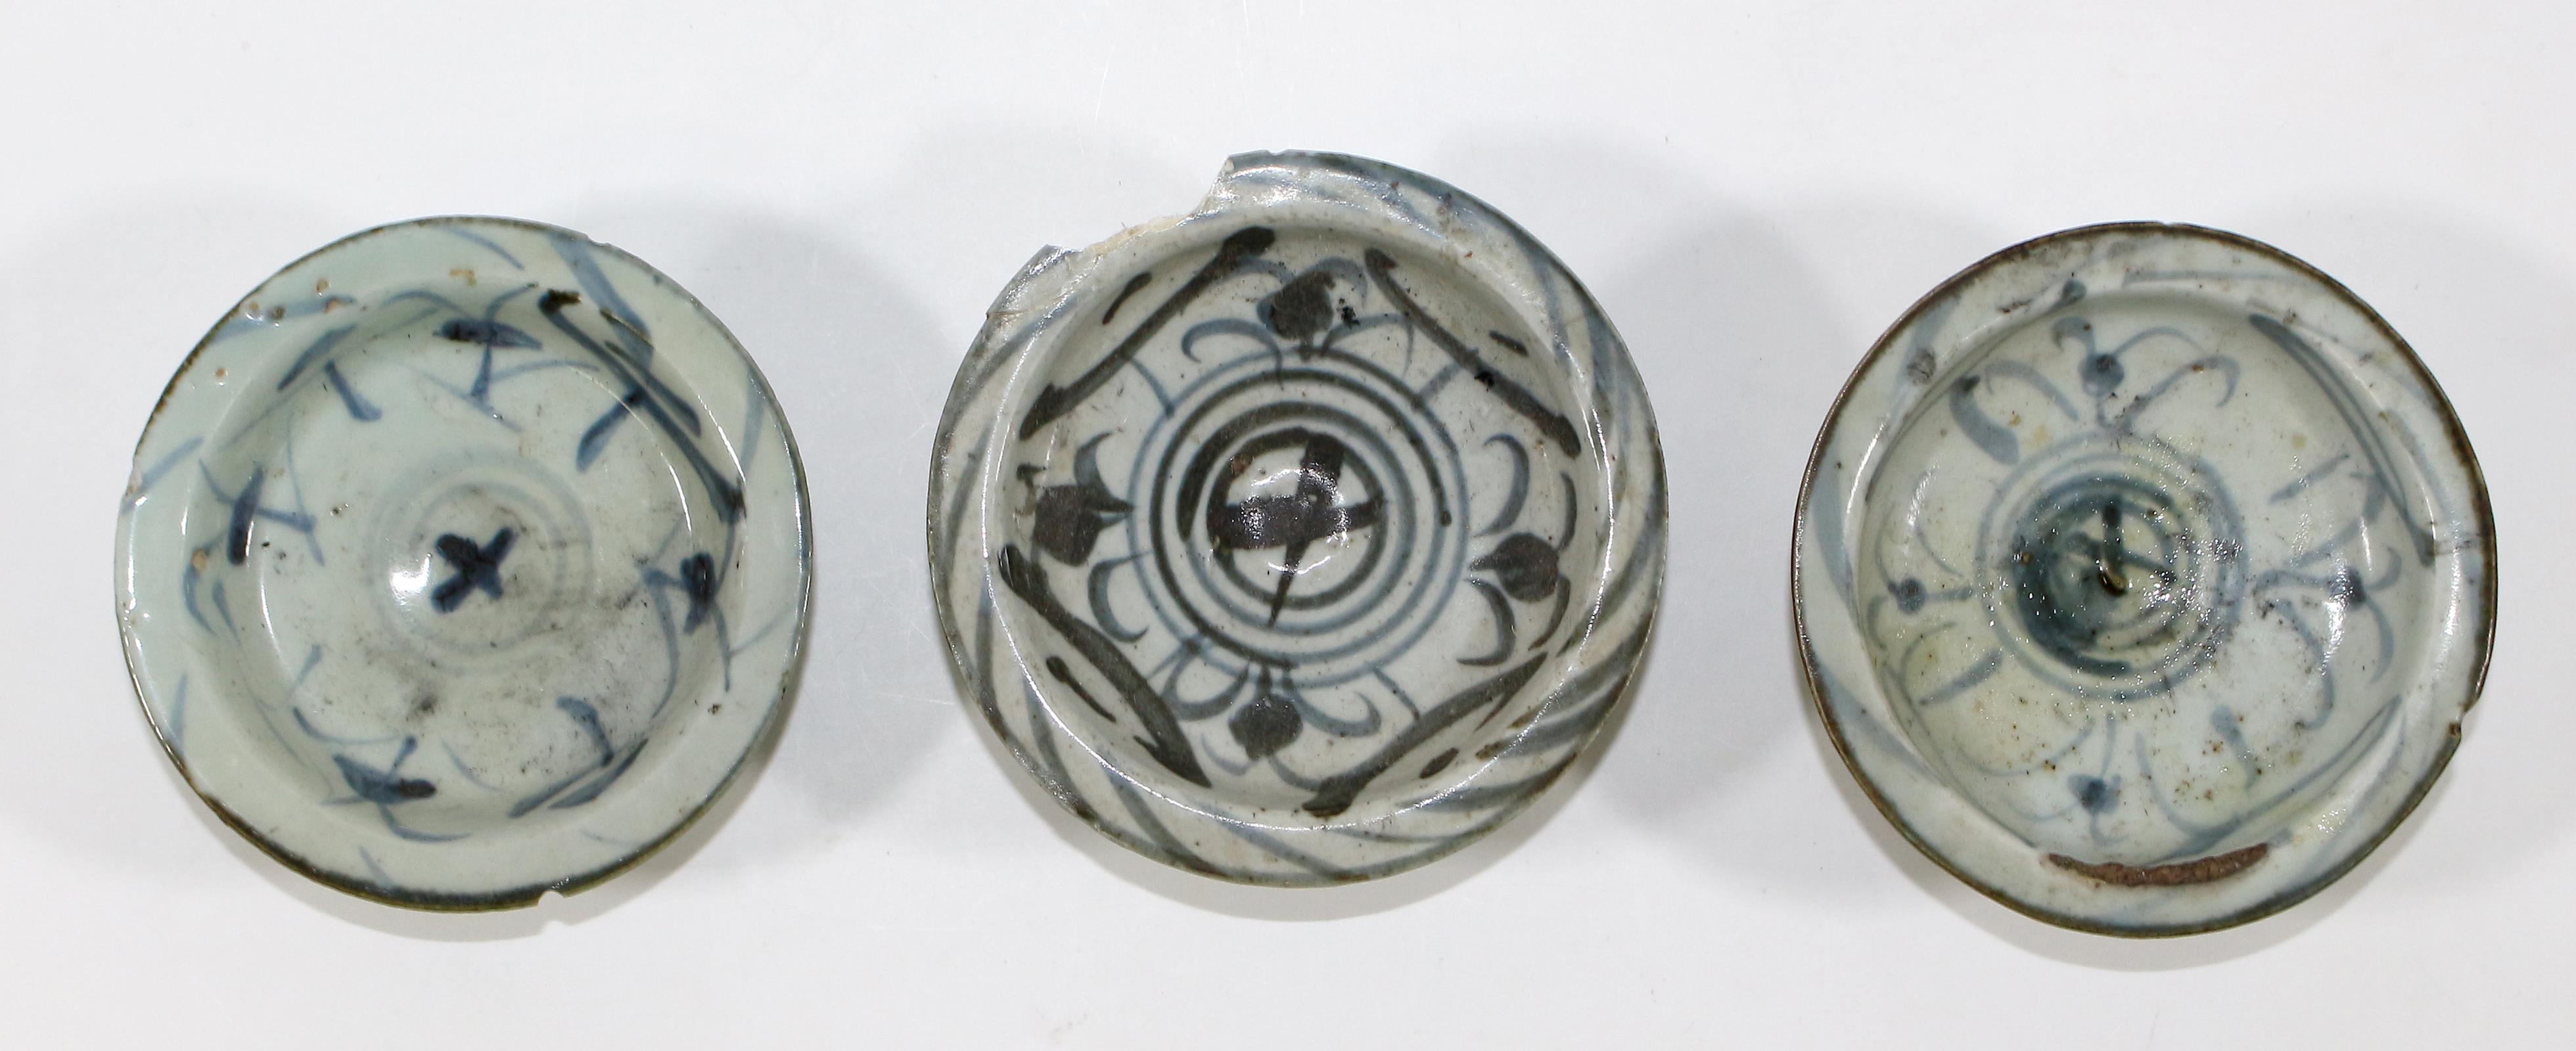 2 Keramiken China, Ostasien. | Bild Nr.2